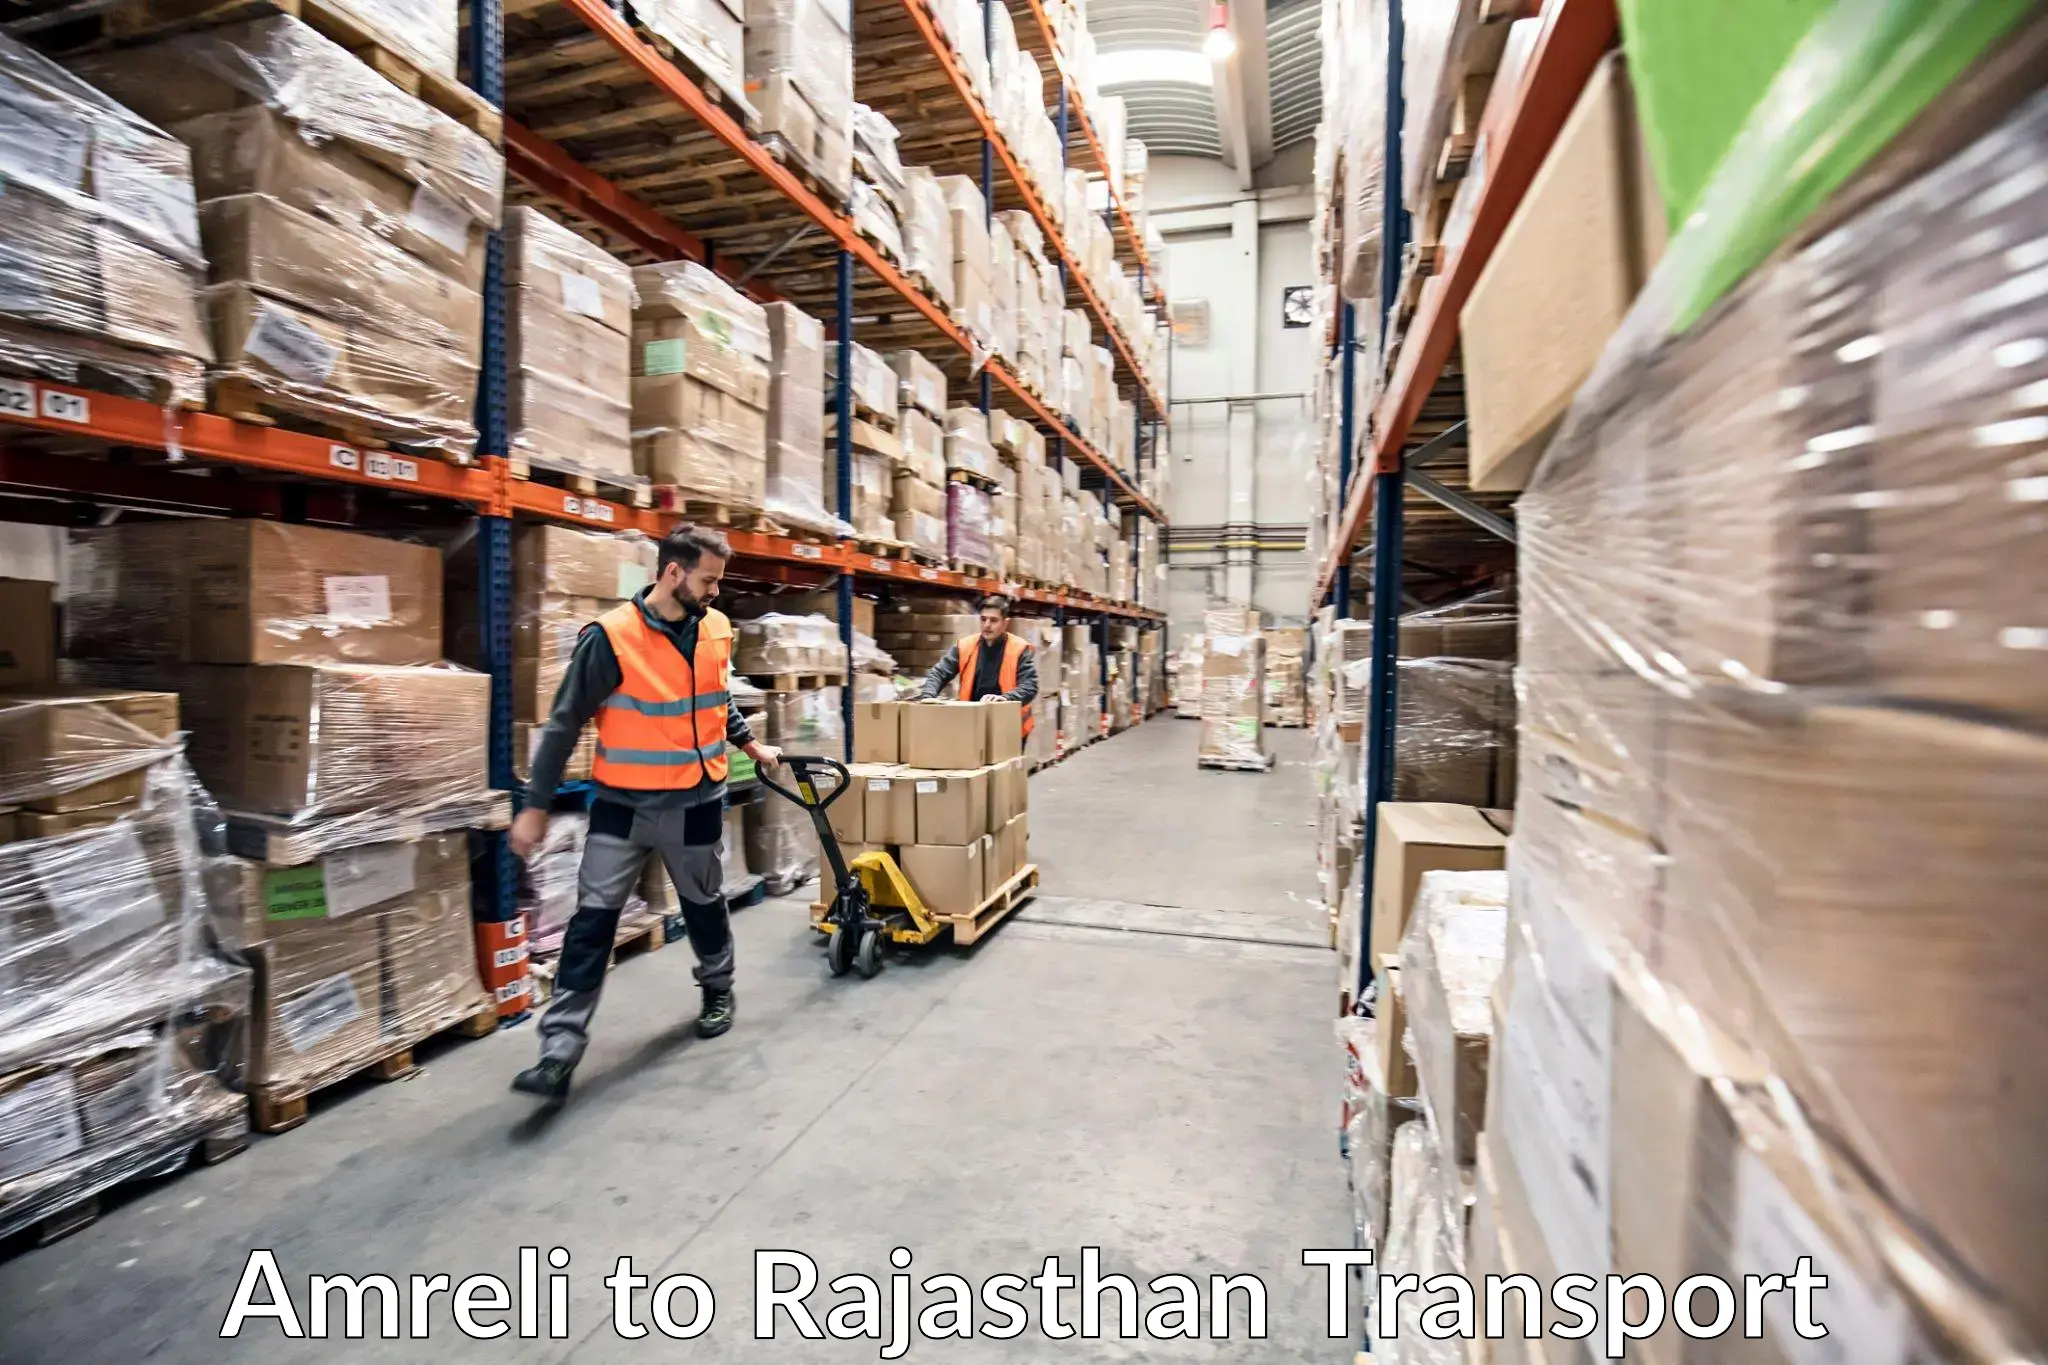 Truck transport companies in India Amreli to Pilani